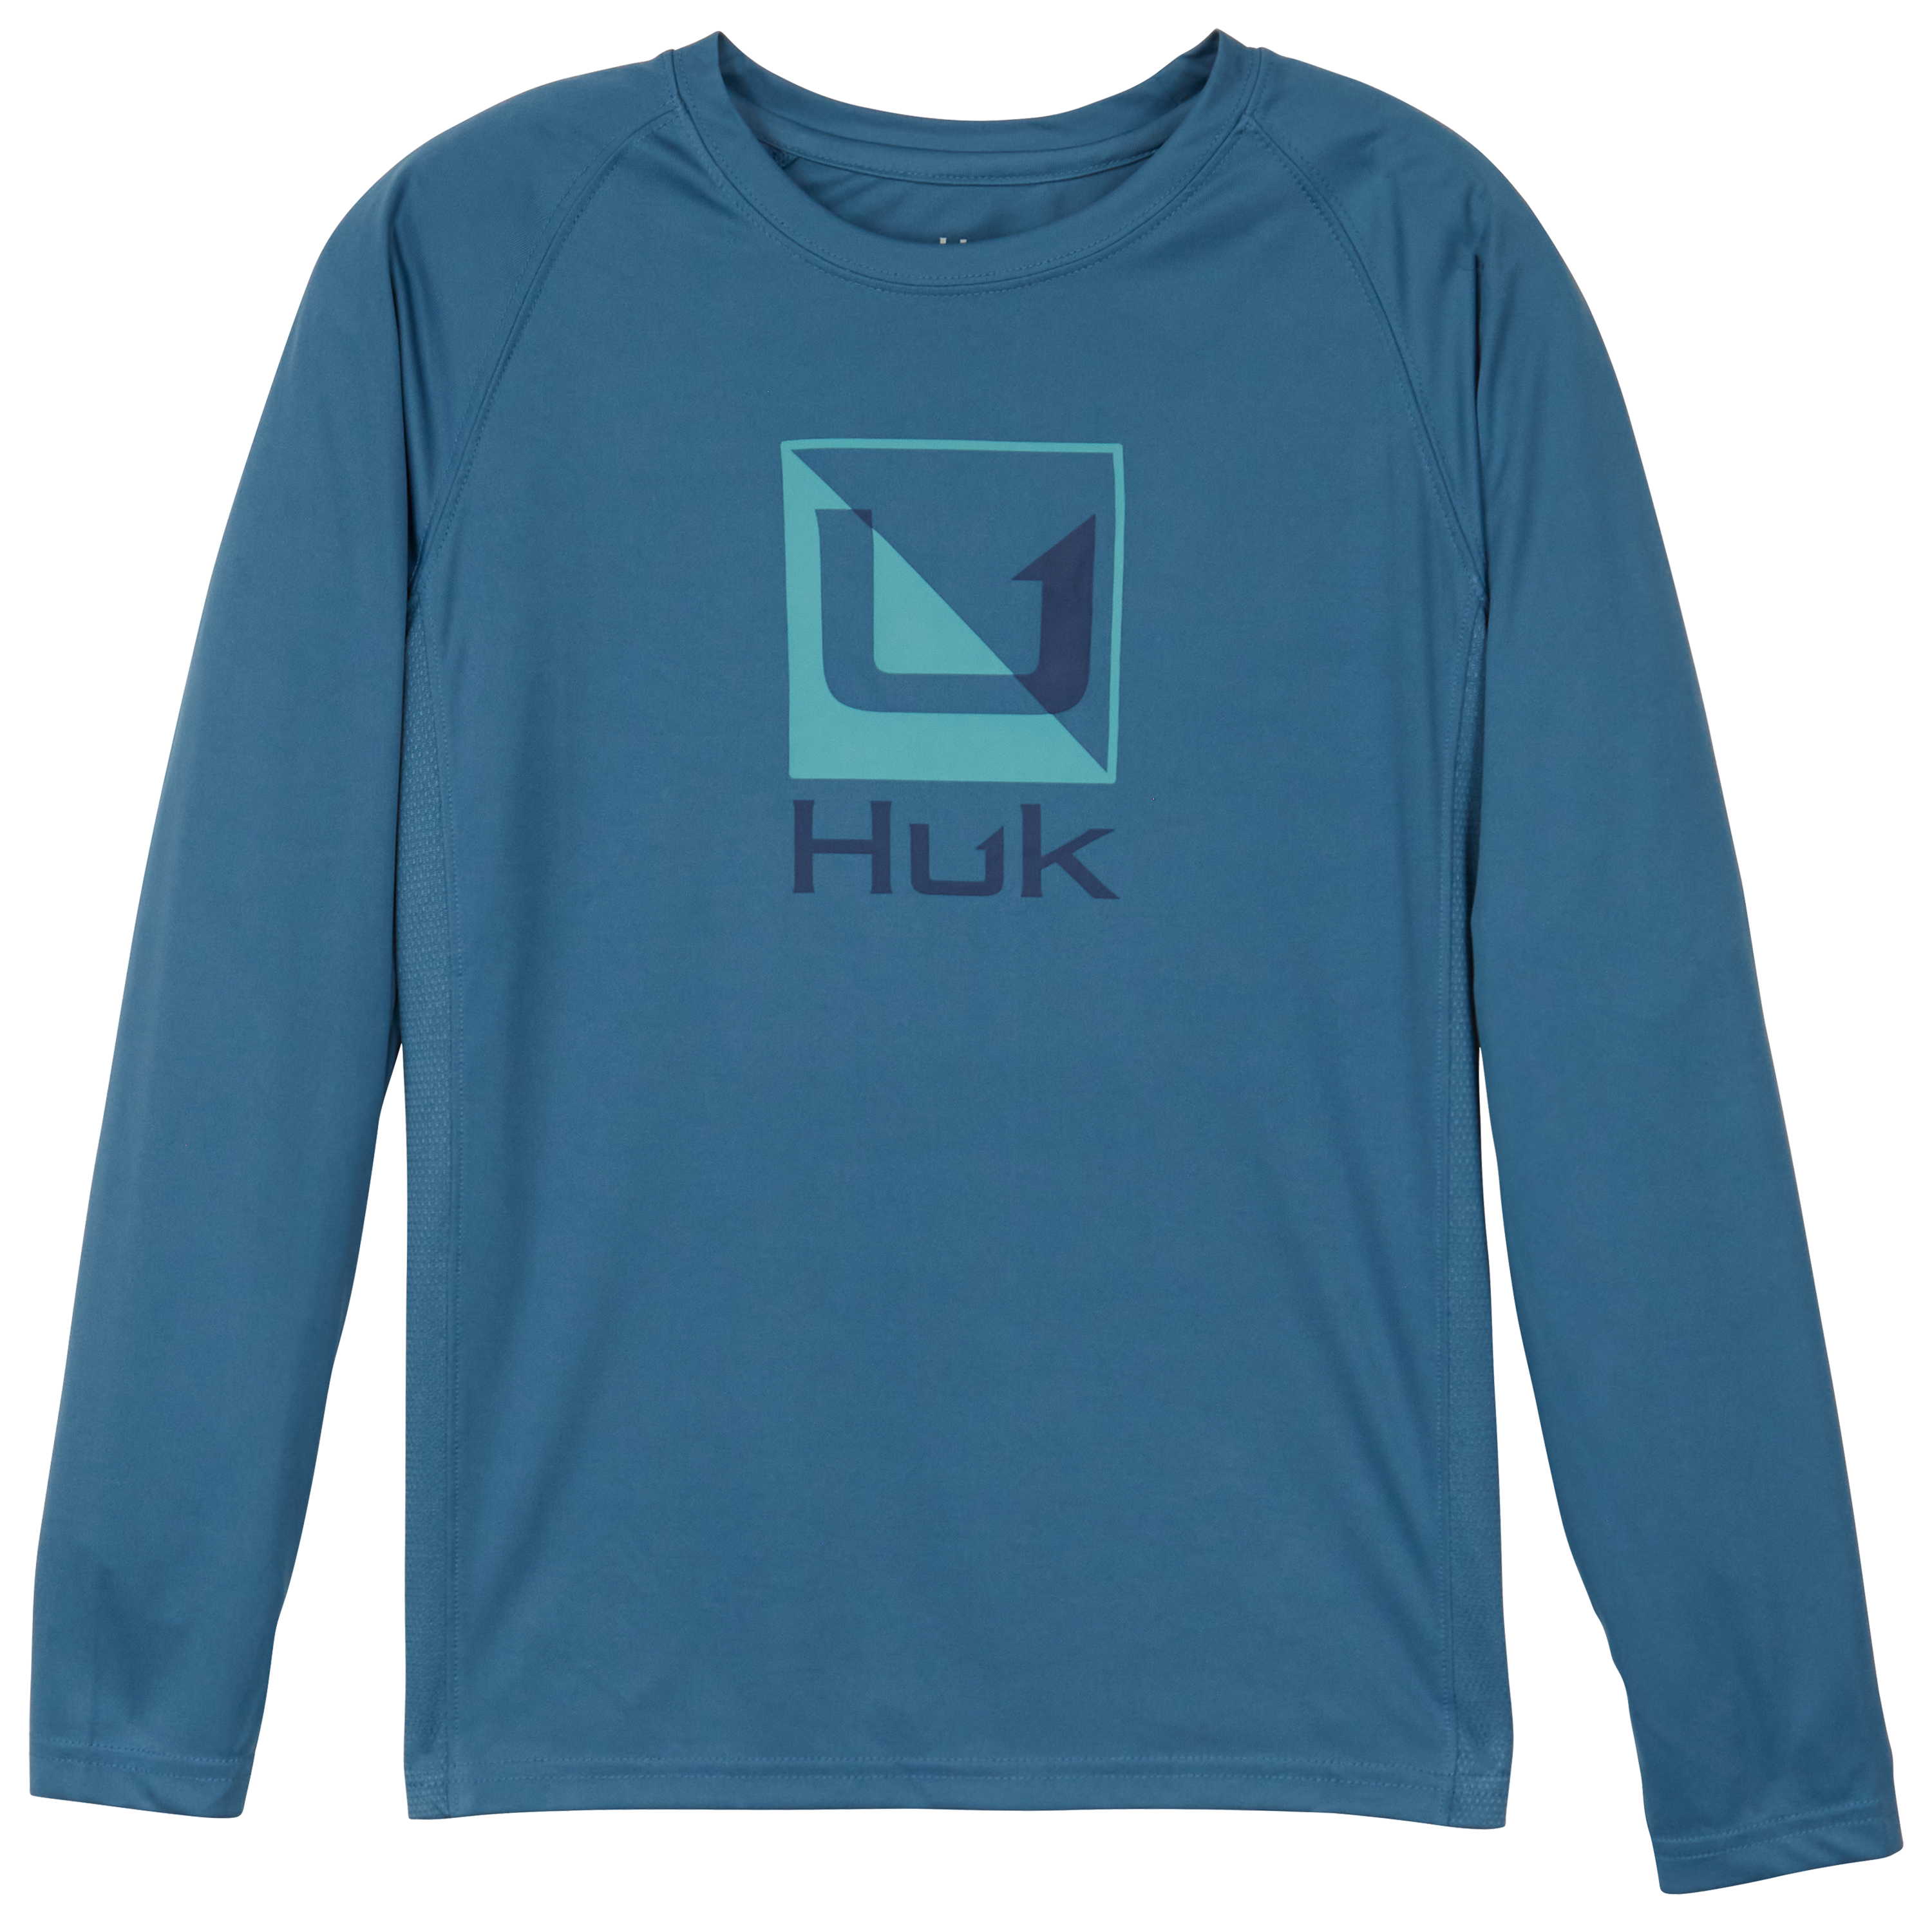 Huk Reflection Pursuit Long-Sleeve Shirt for Kids - Titanium Blue - XL